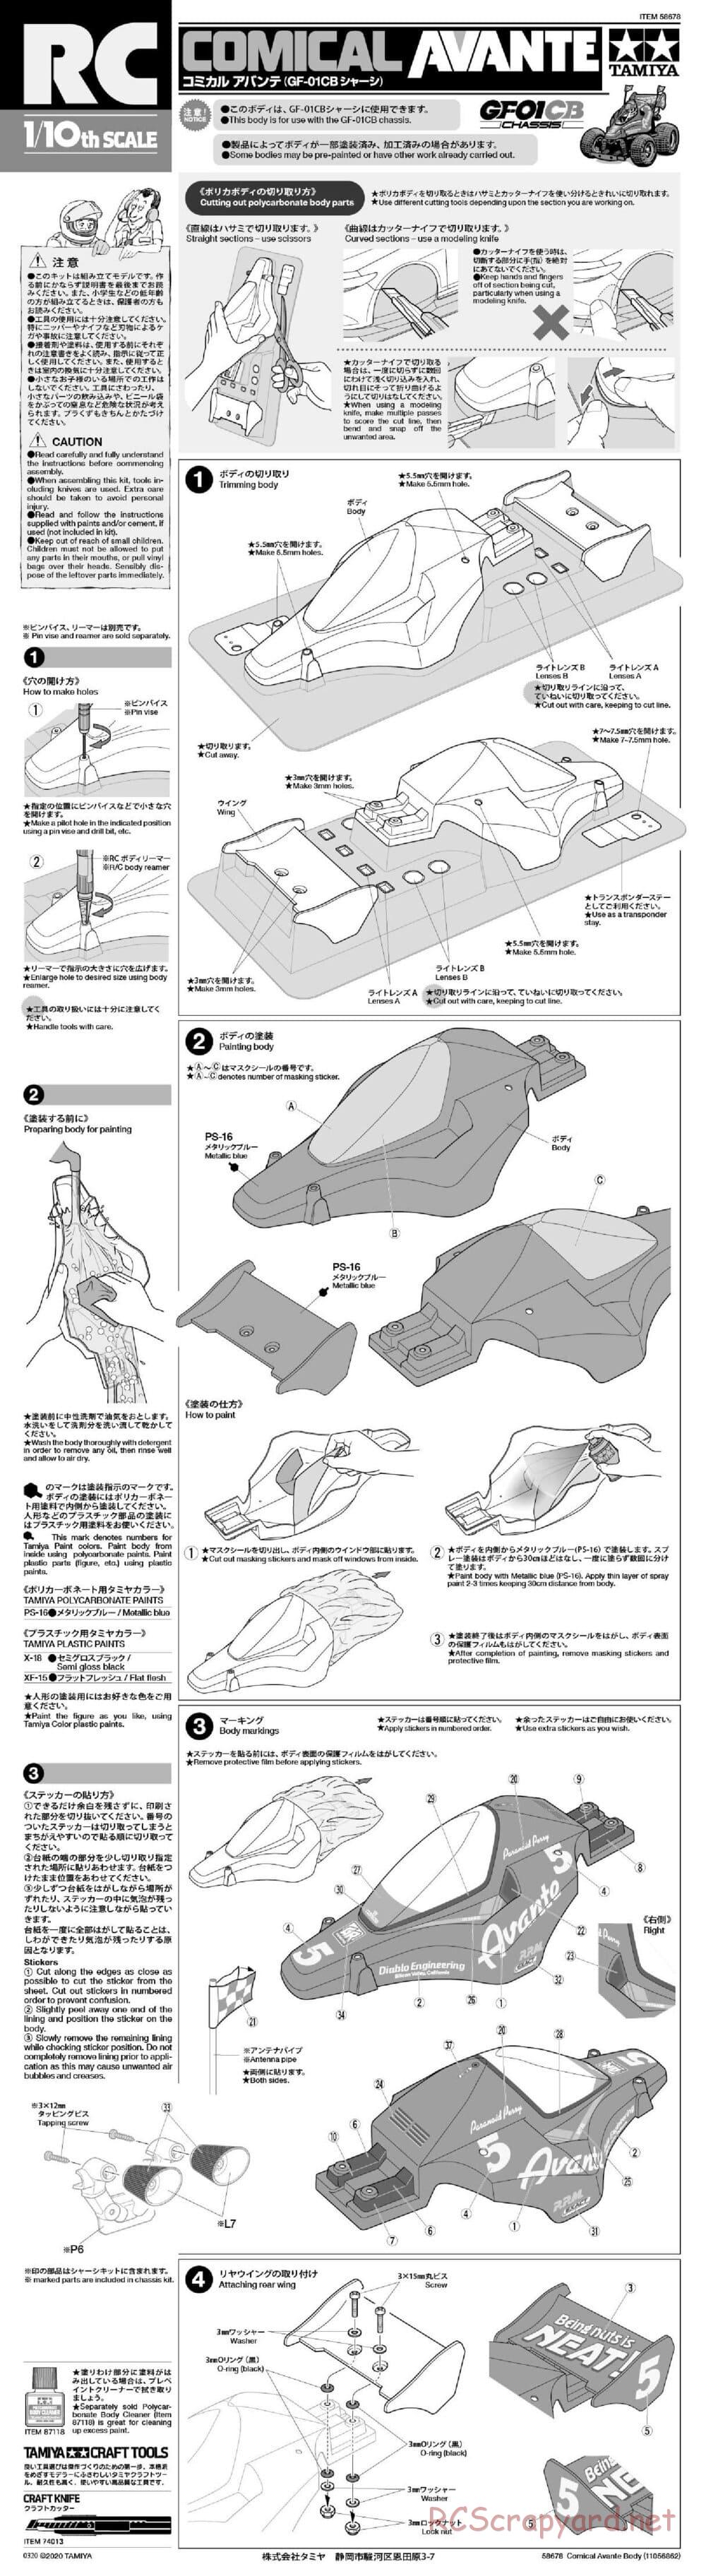 Tamiya - Comical Avante - GF-01CB Chassis - Manual - Page 1